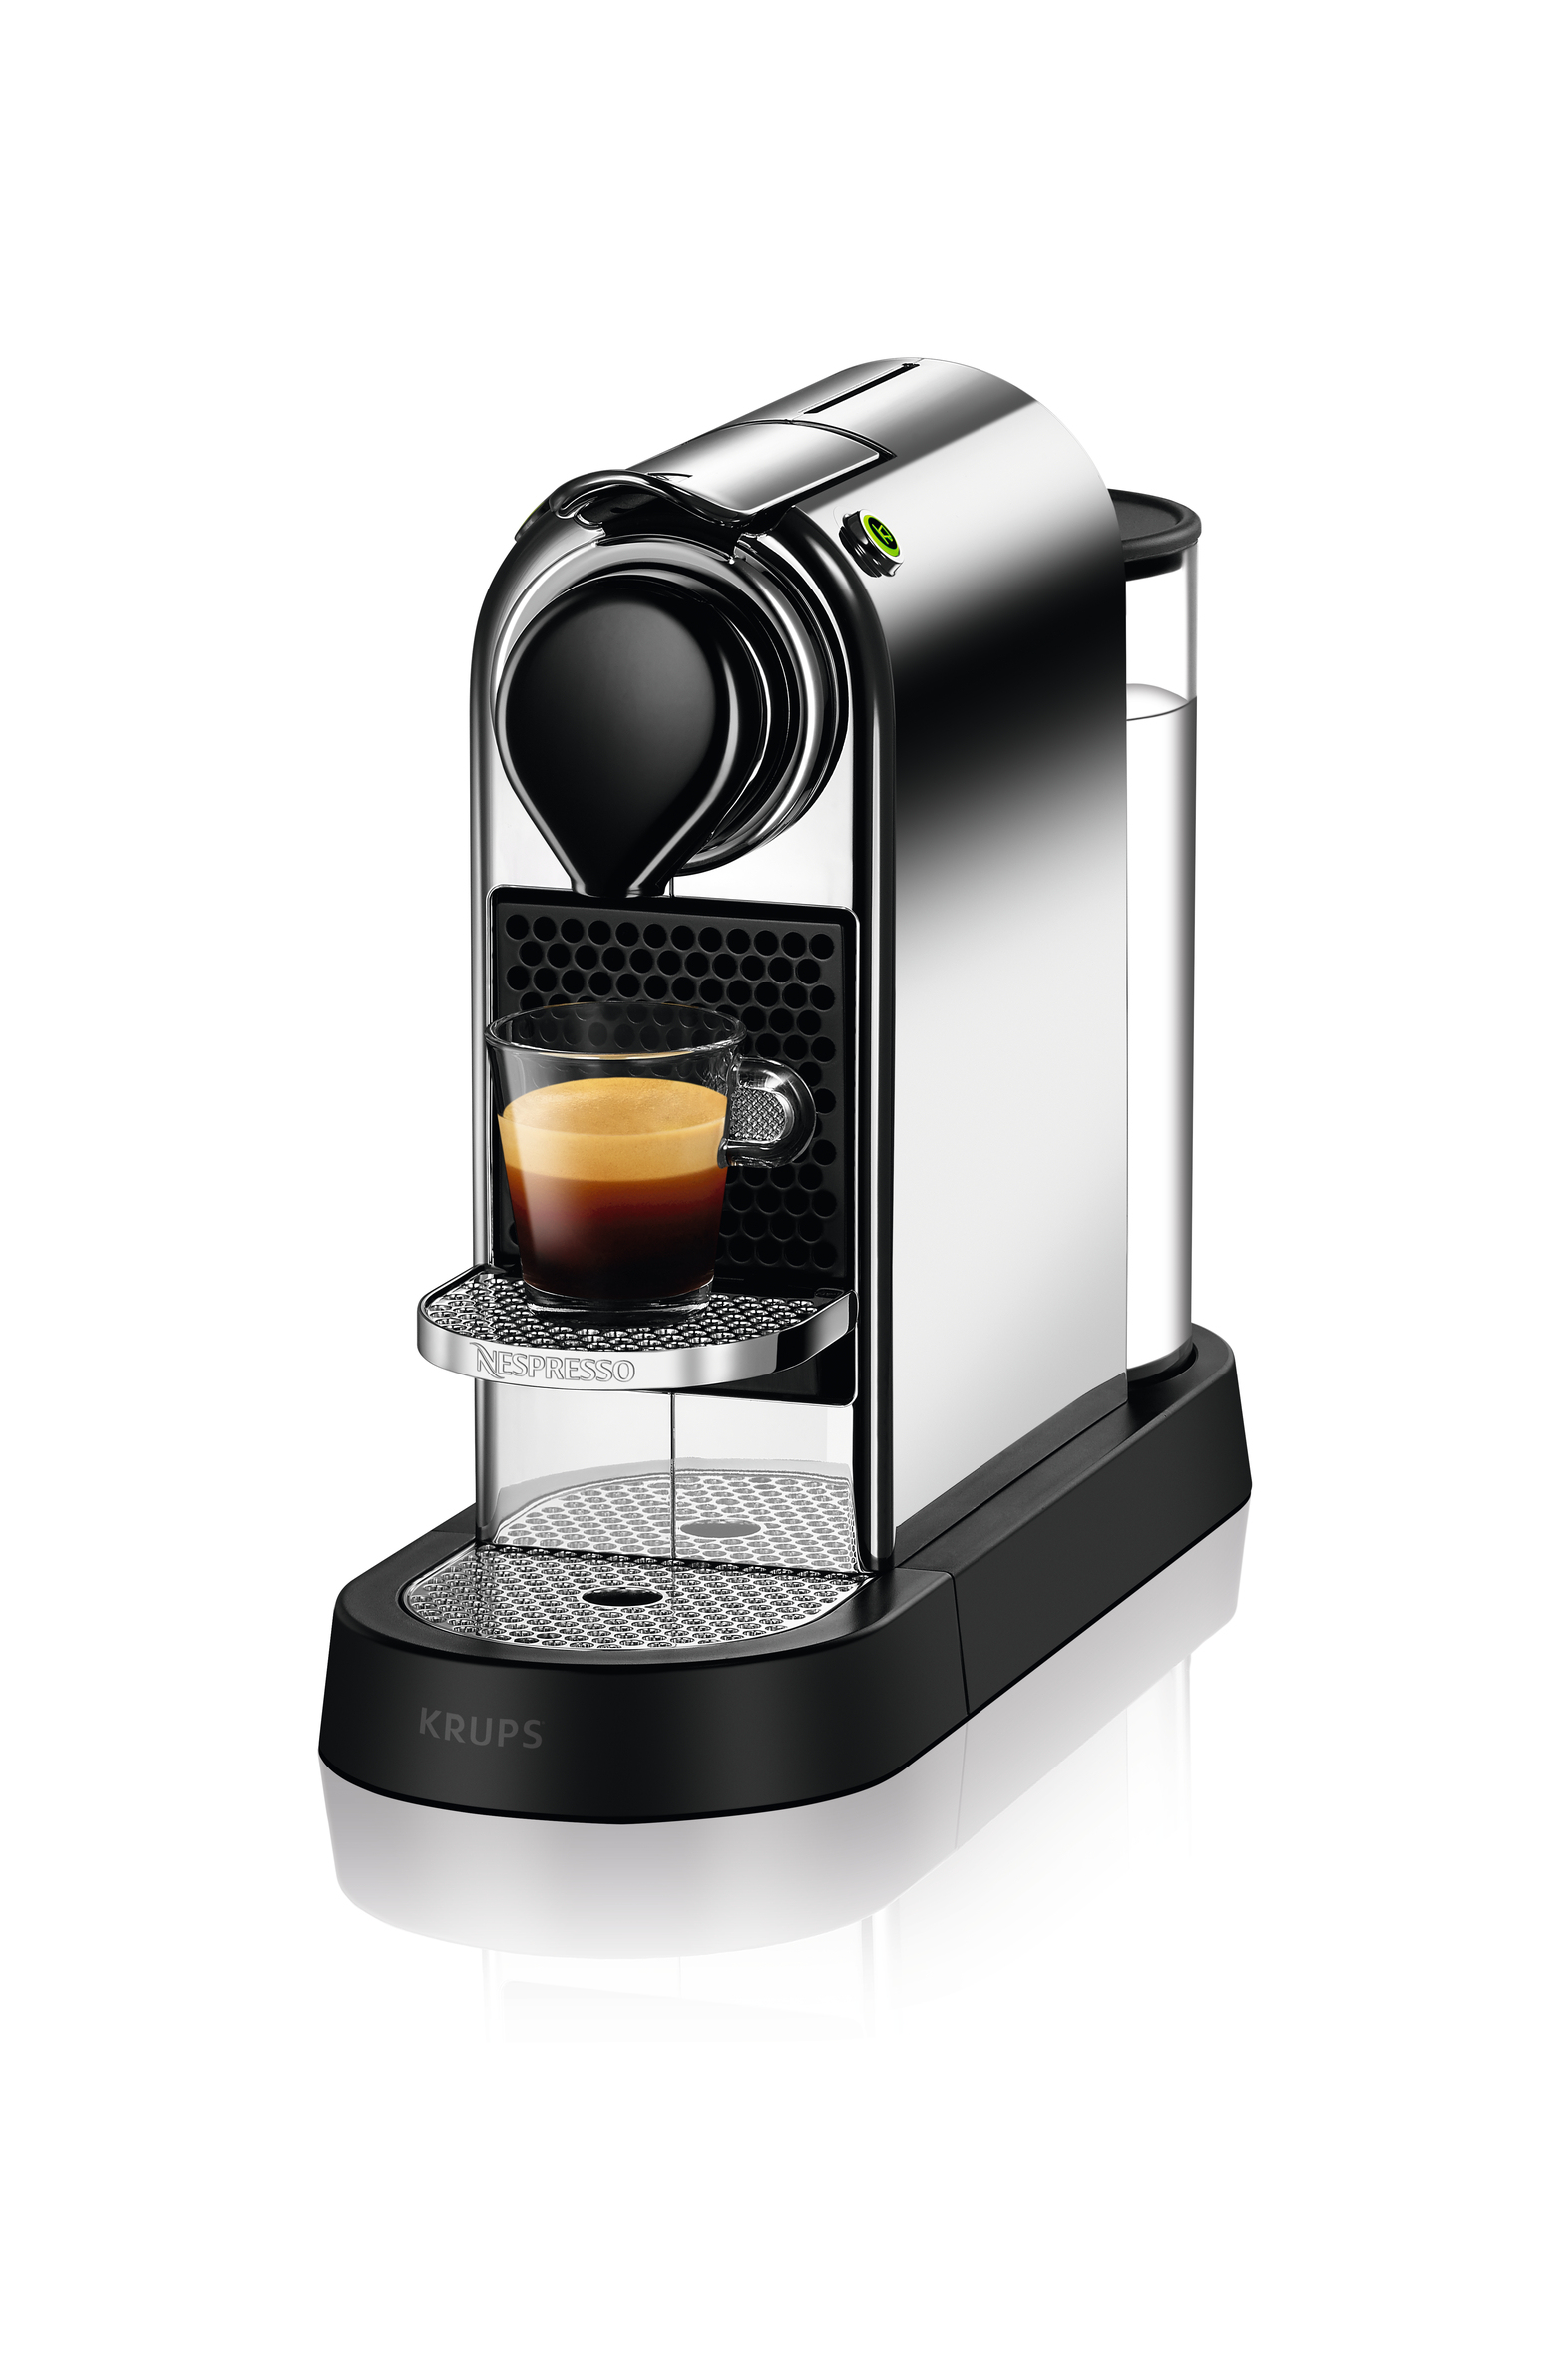 Krups Nespresso XN741C coffee maker